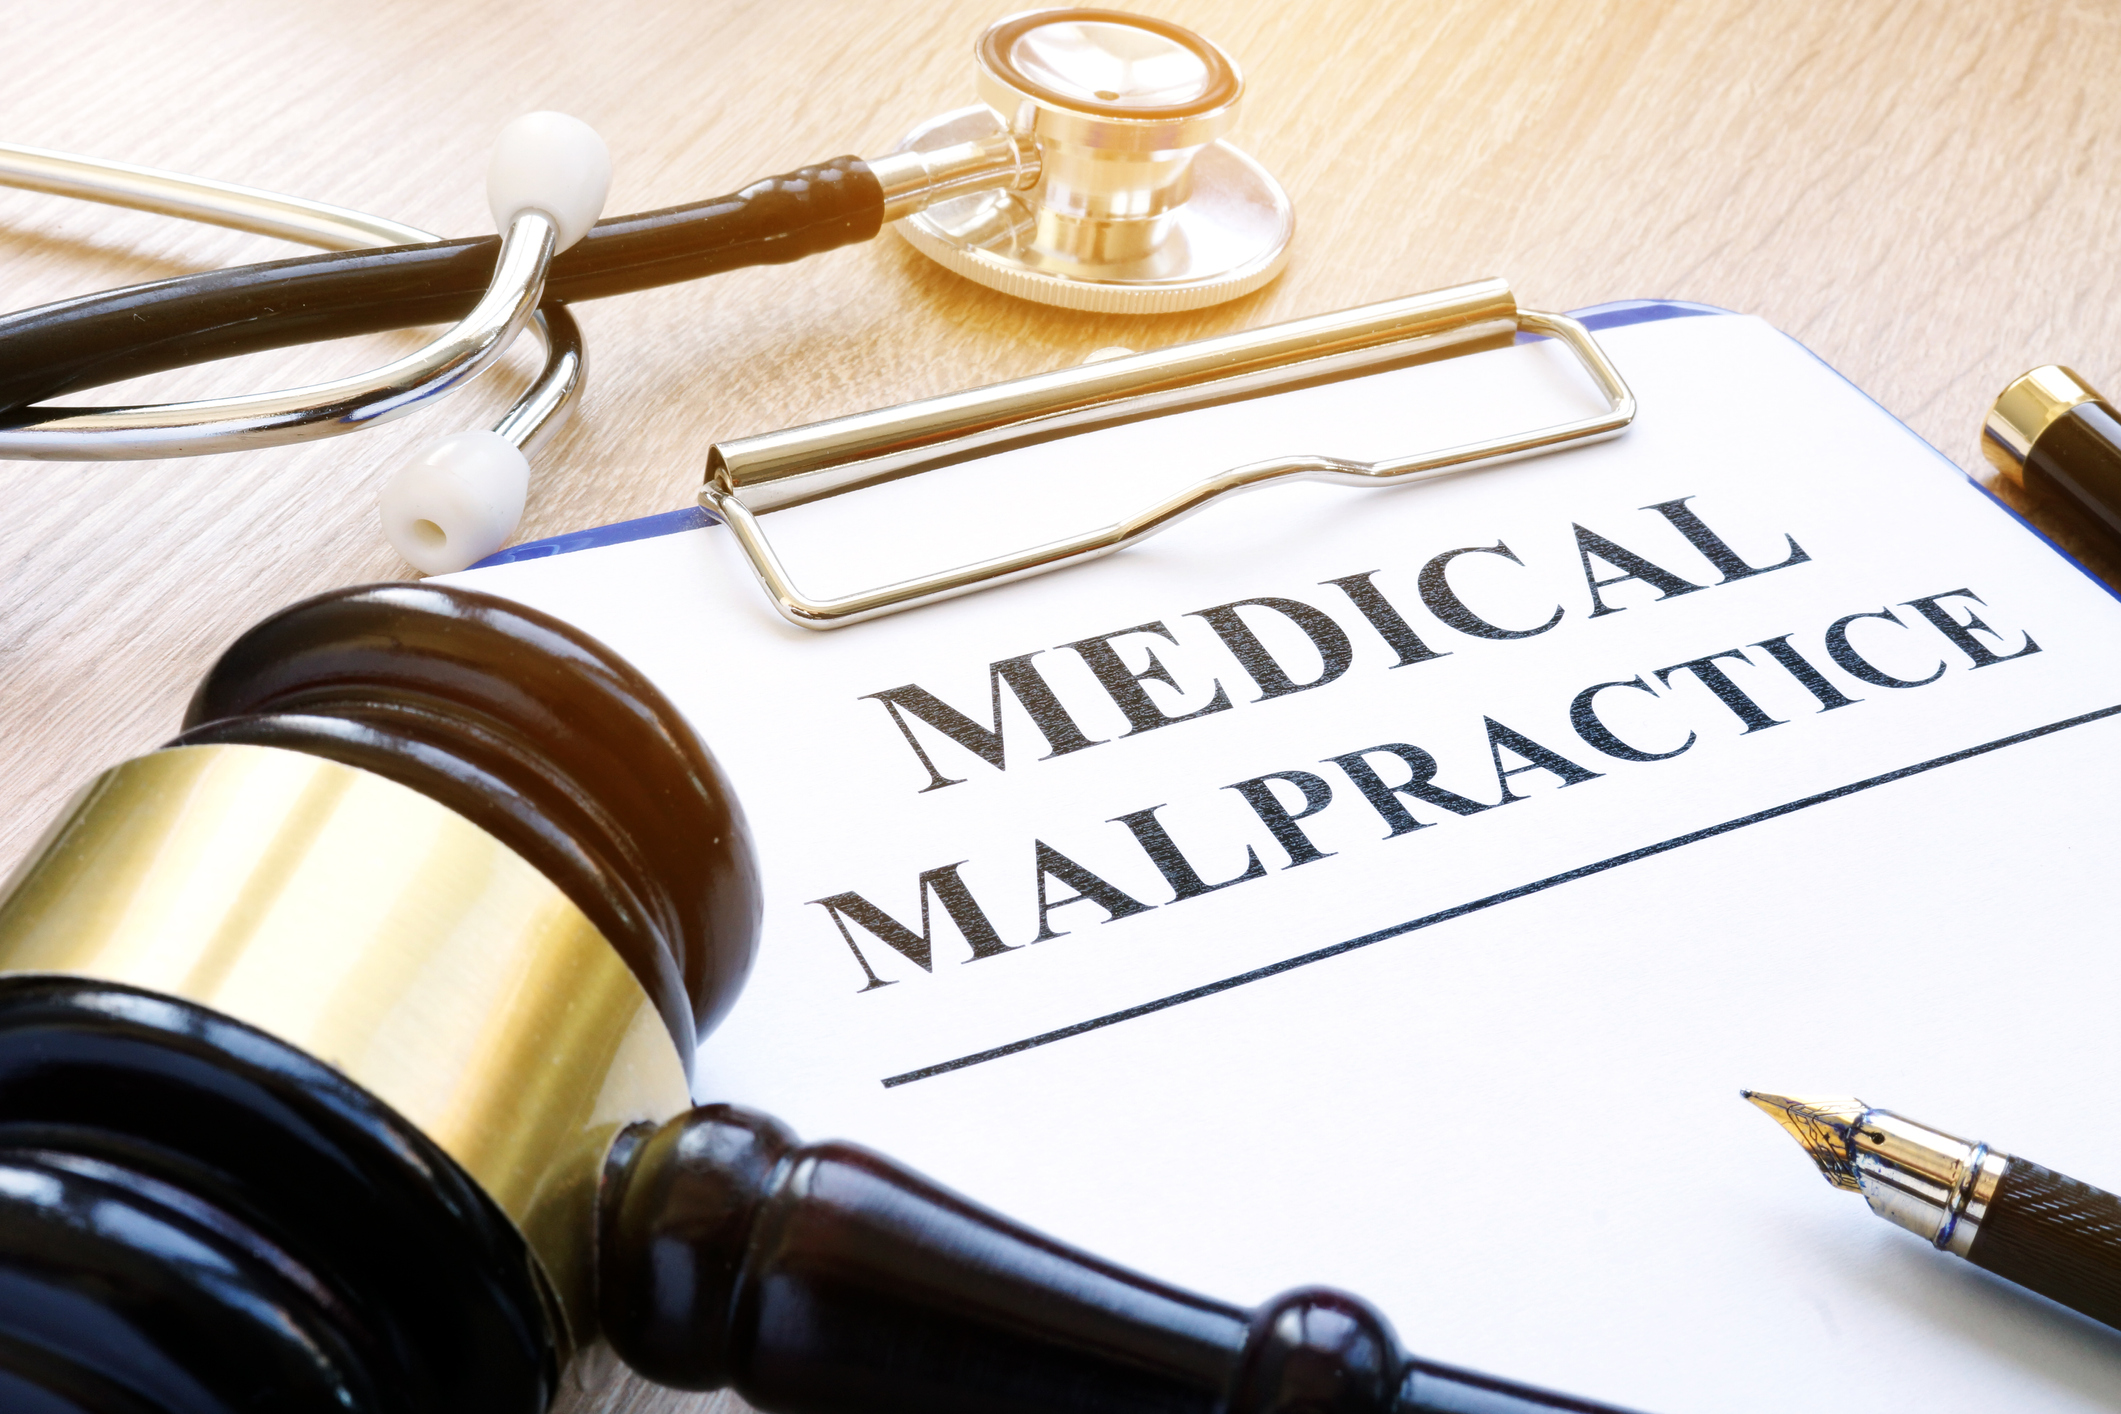 Medical Malpractice Claim